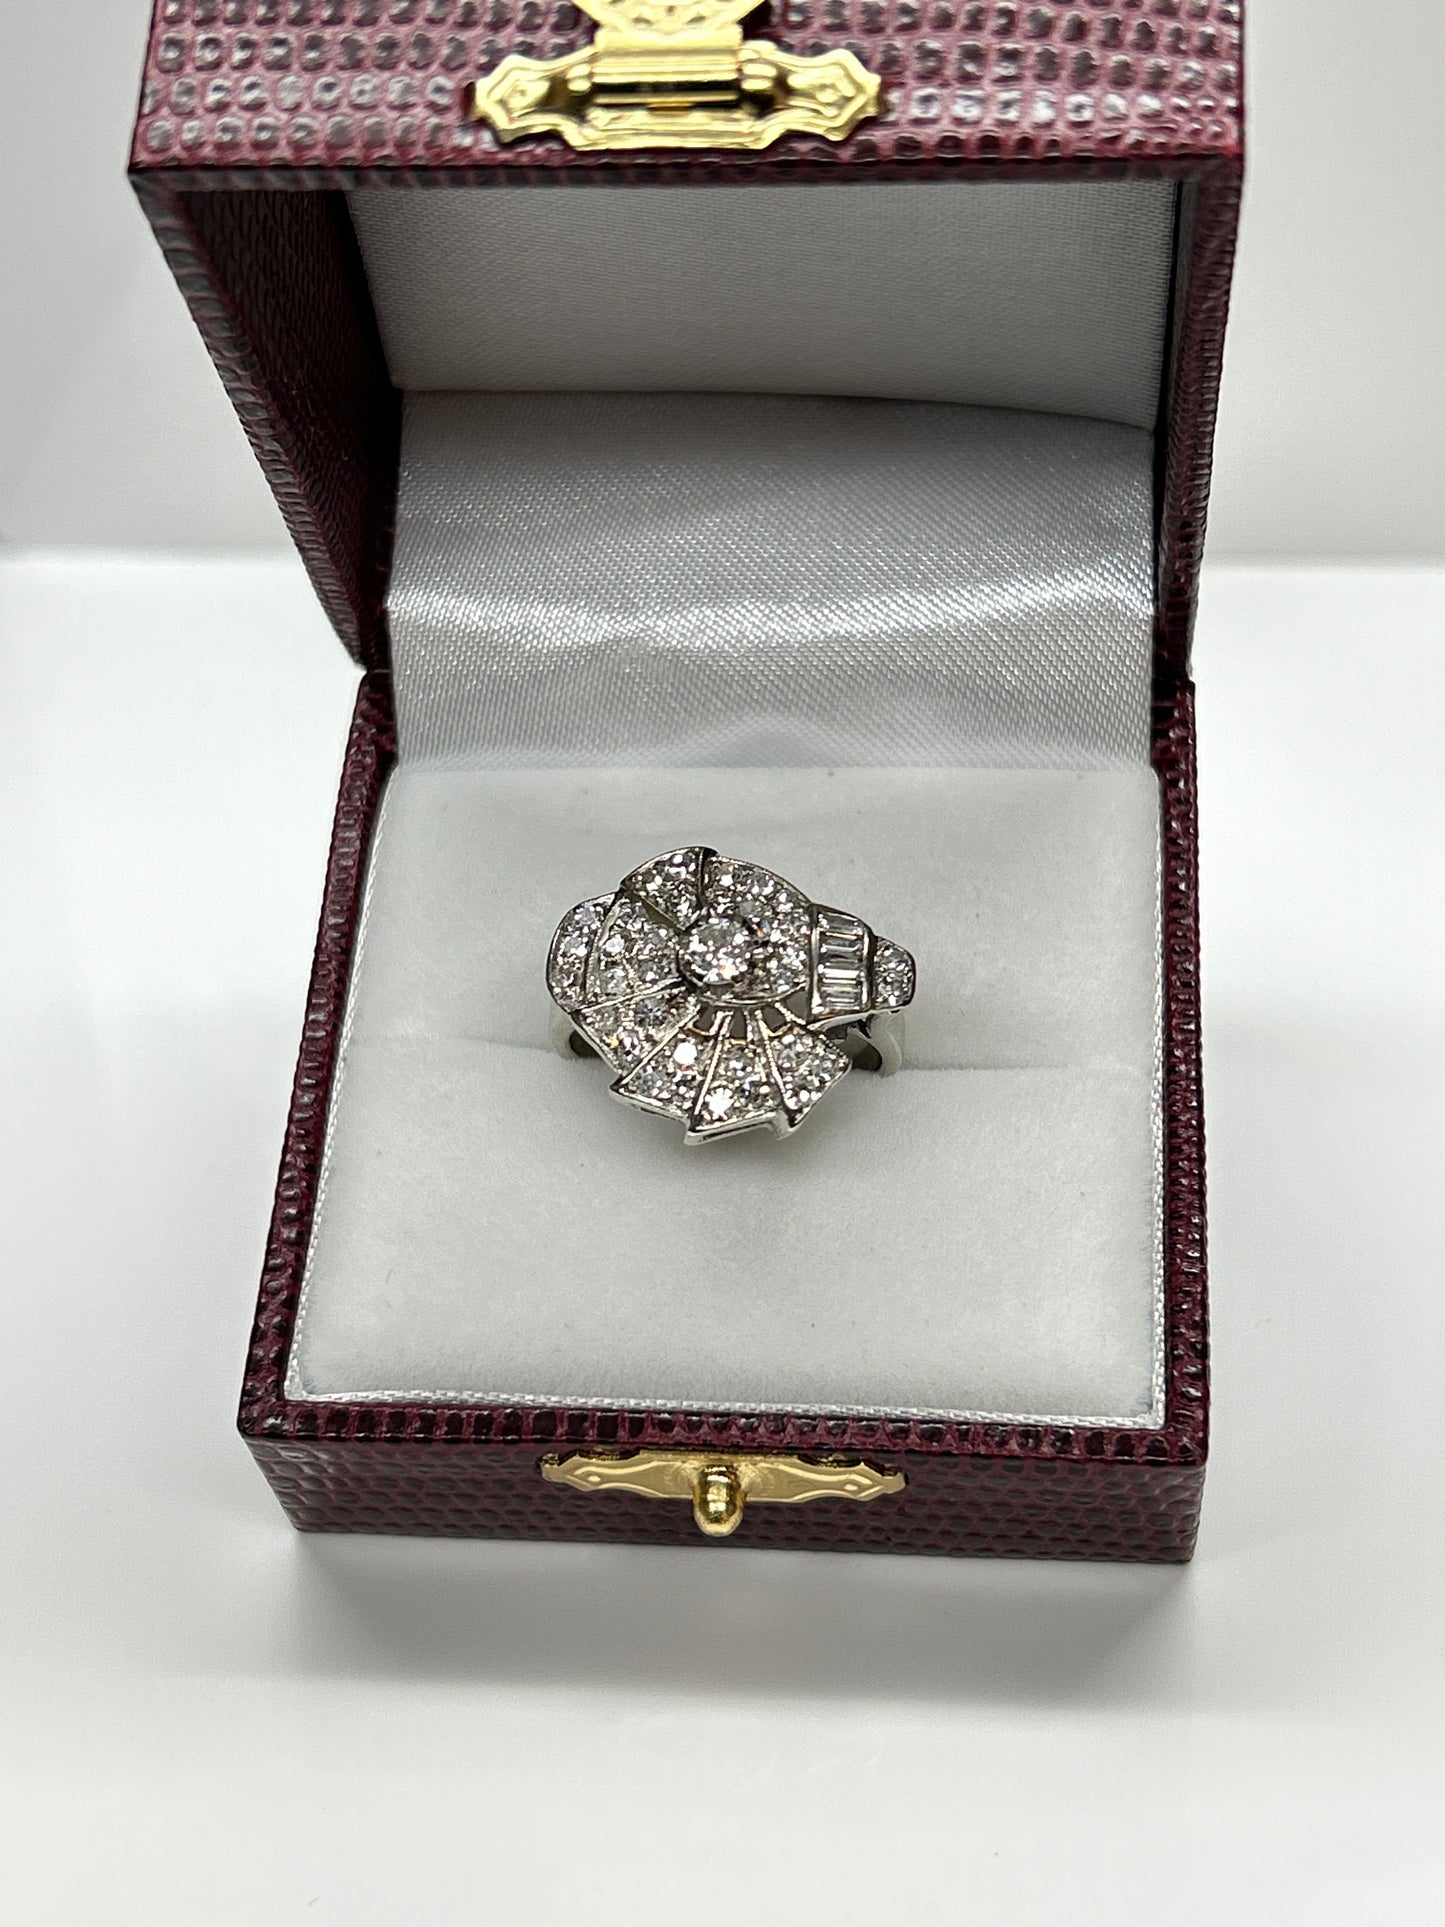 Vintage Art Deco 14k White Gold Diamond Ring